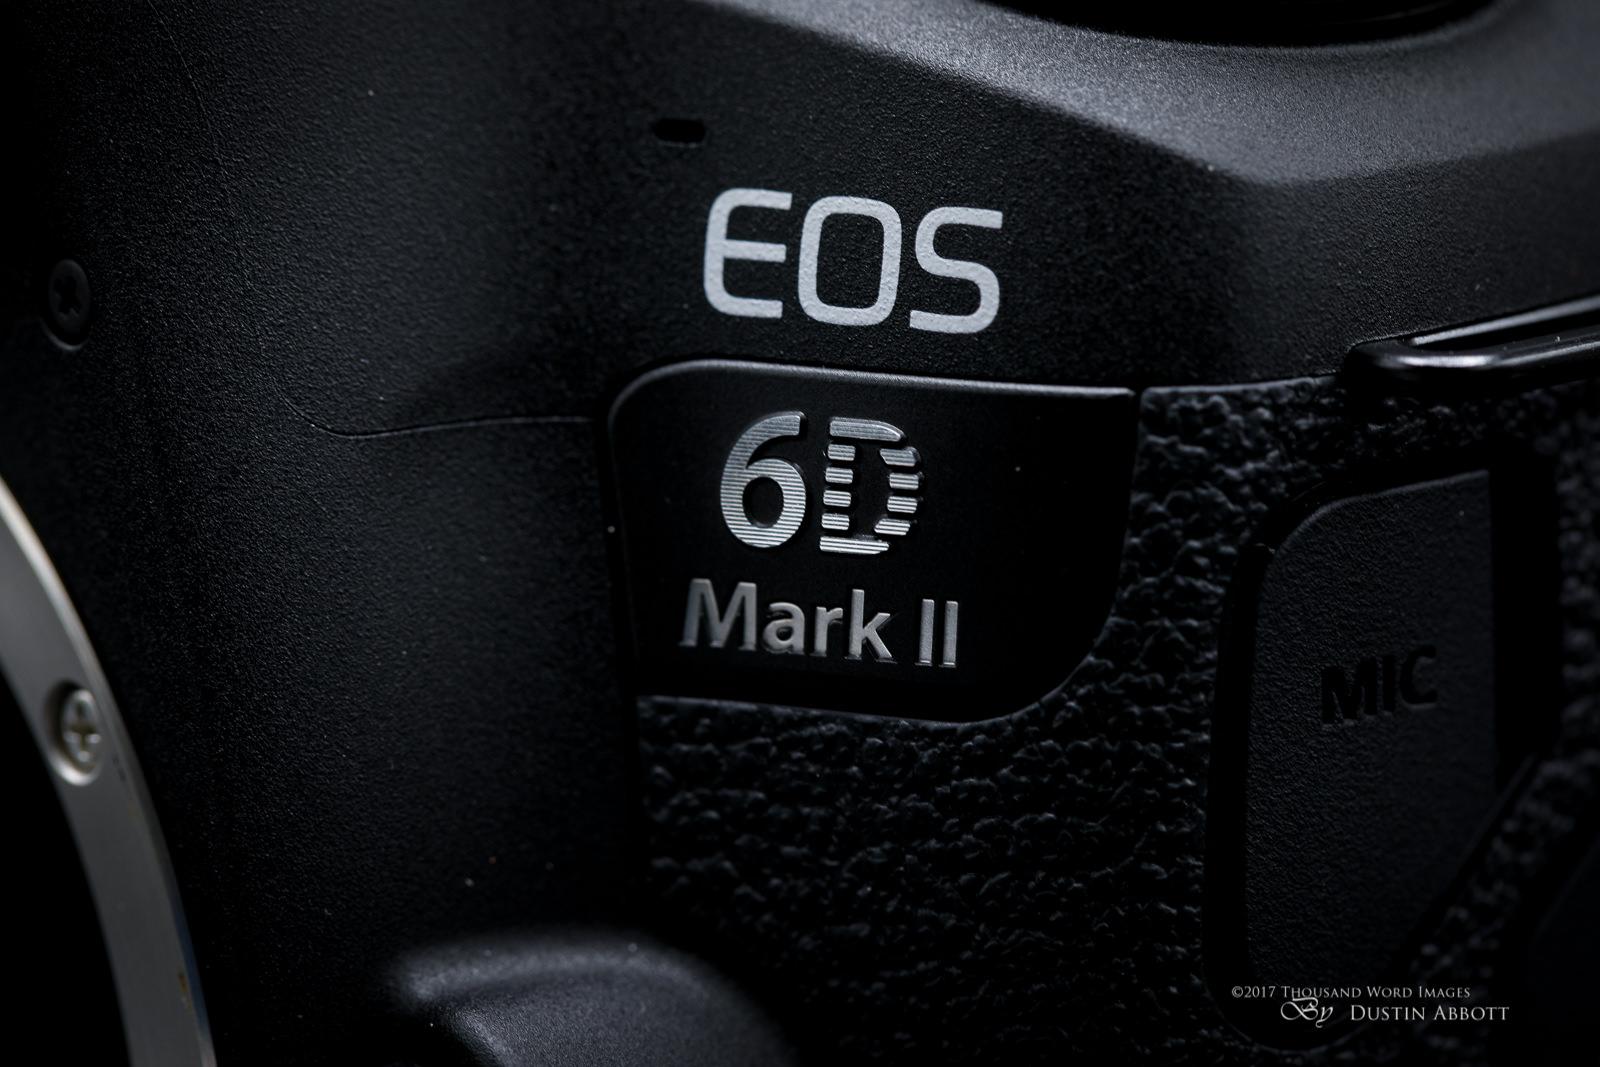 Canon EOS 6D Mark II Image Gallery